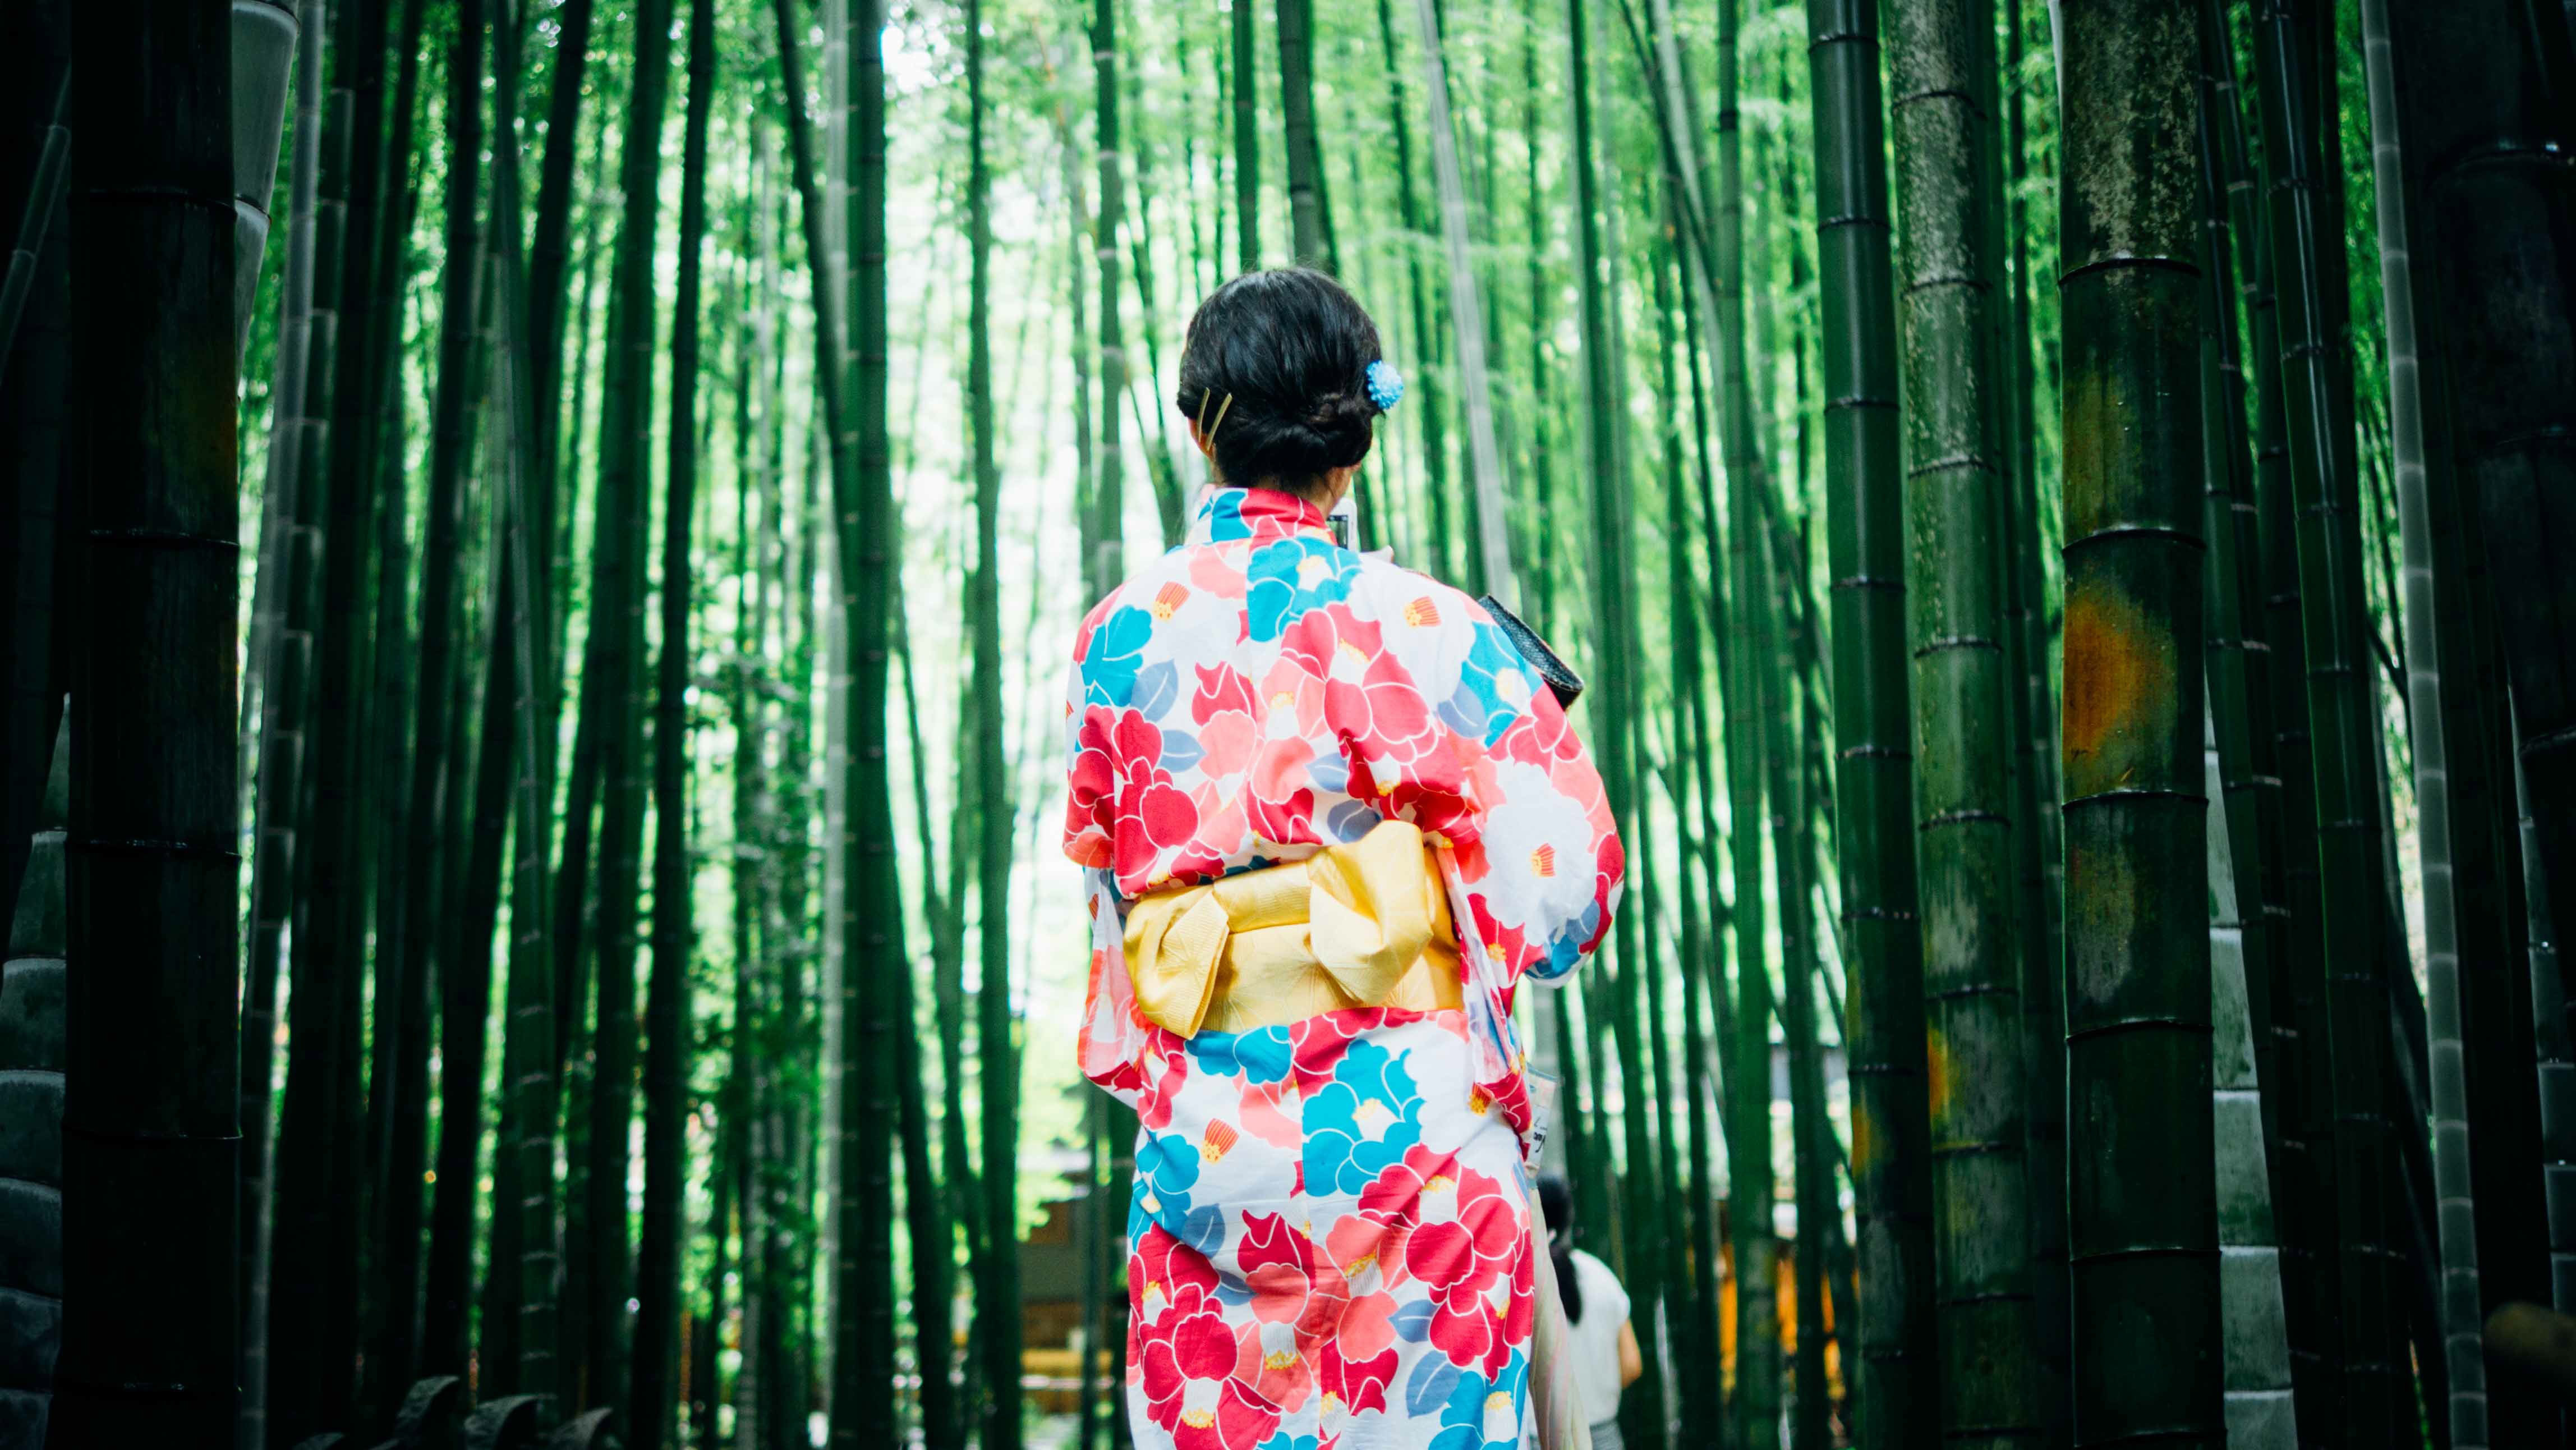 women-in-kimono-in-japan image - Free stock photo - Public Domain photo - CC0 Images